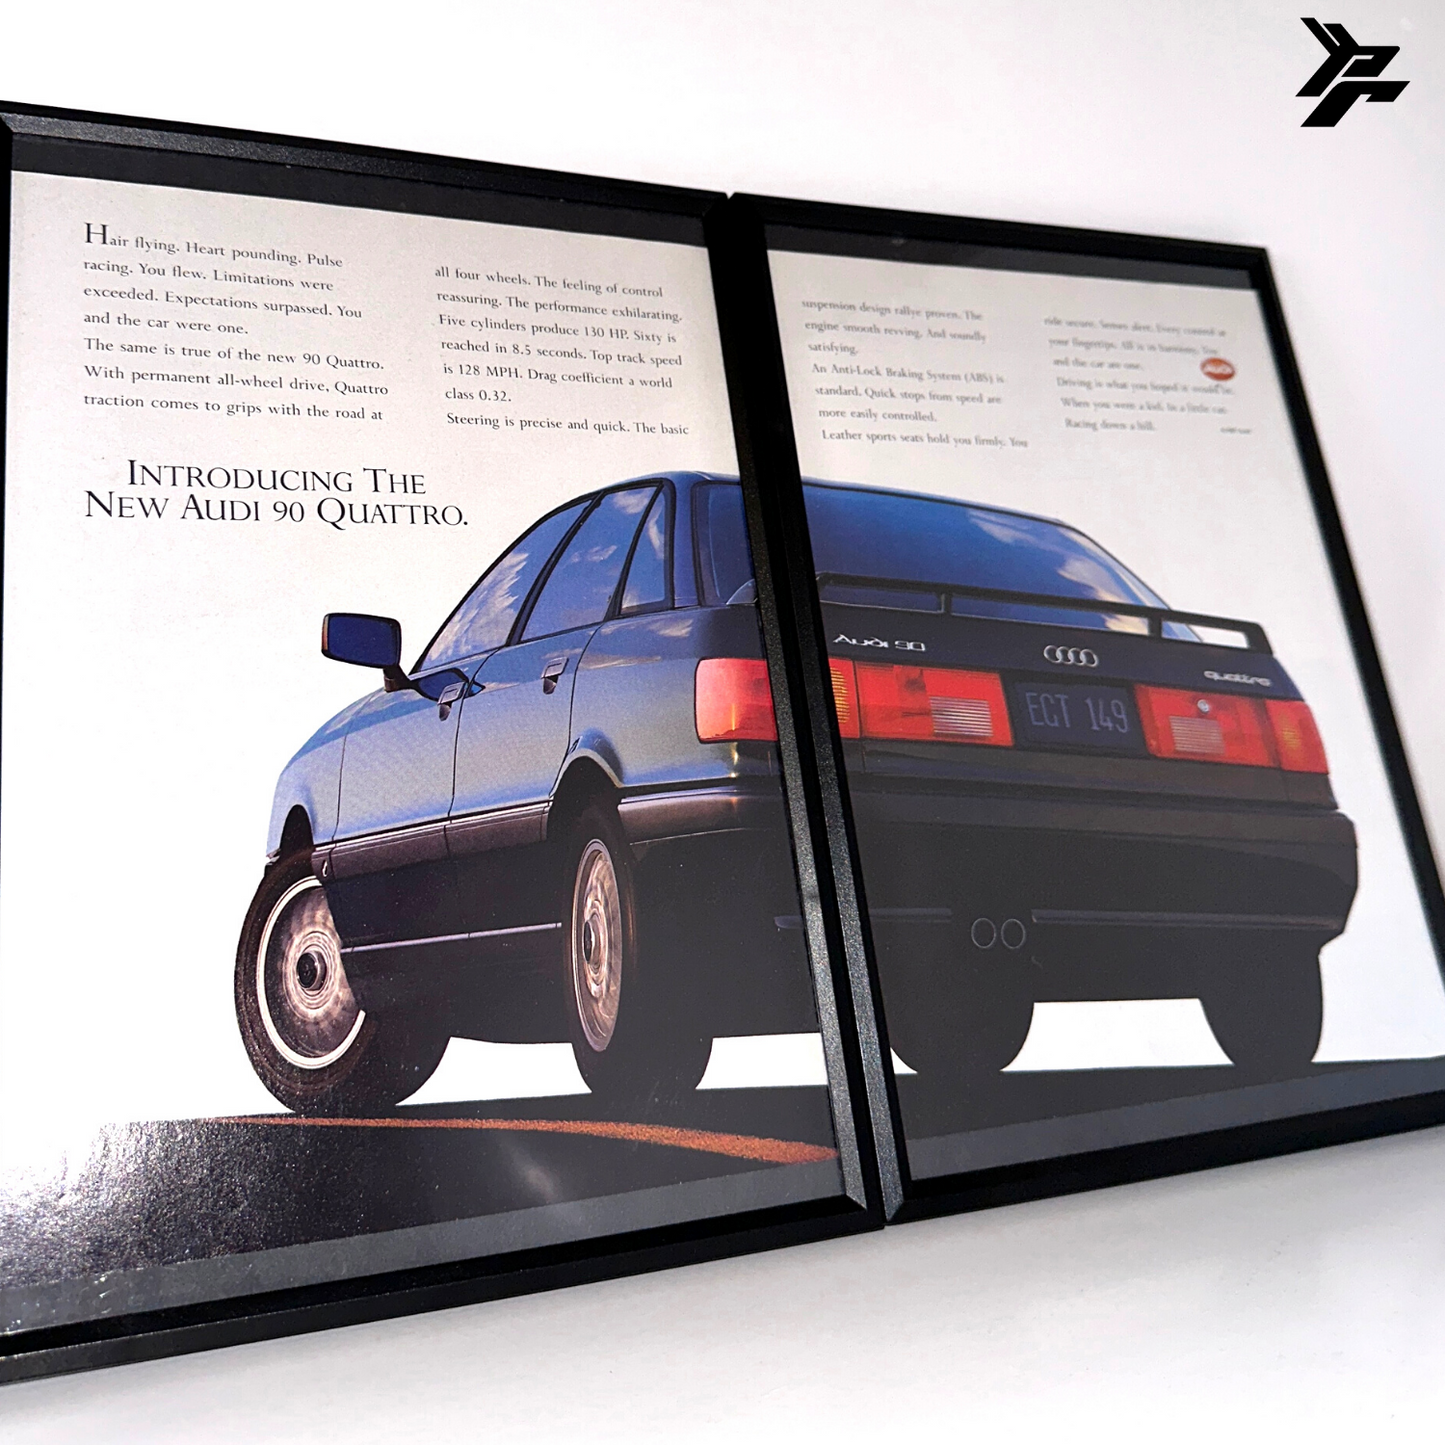 The New Audi 90 Quattro framed ad